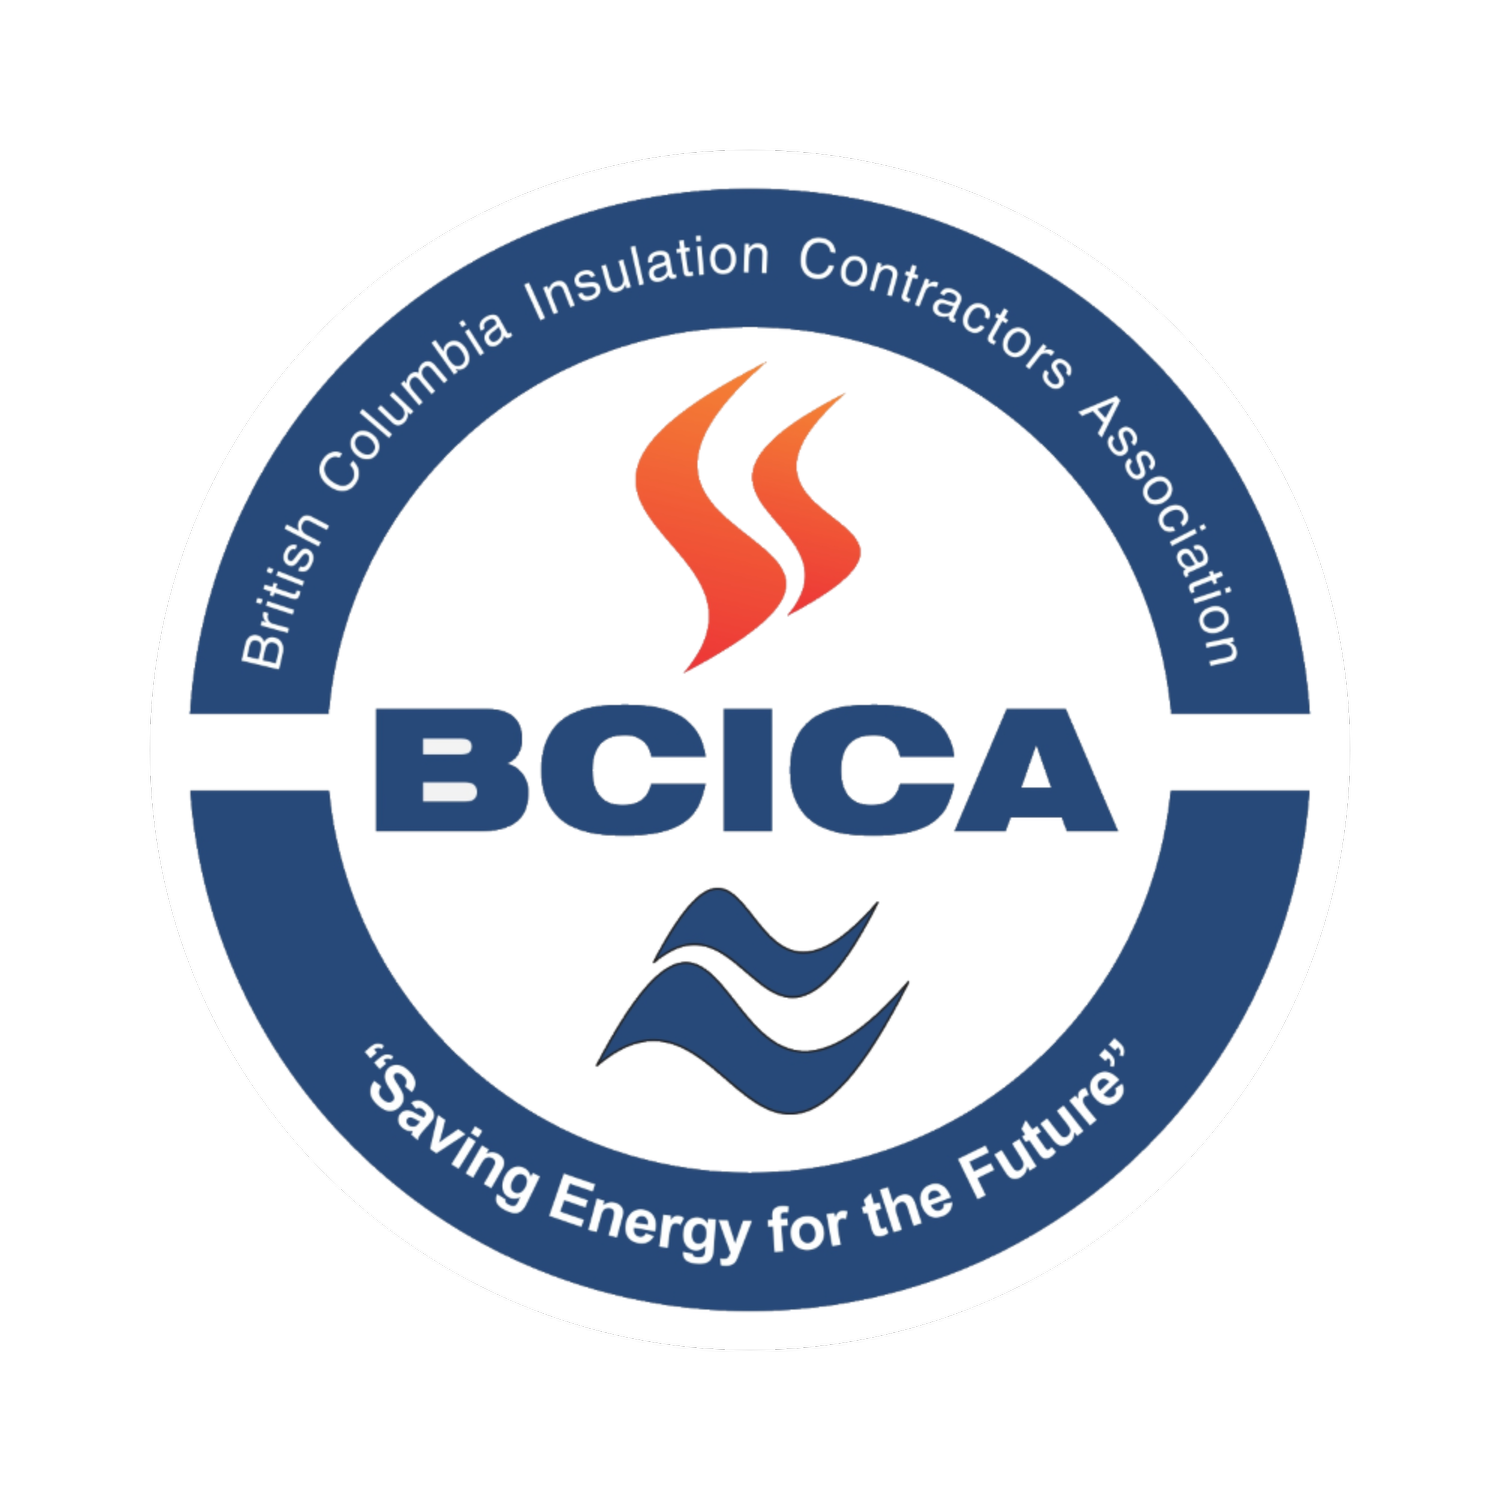 BC Insulation Contractors Association